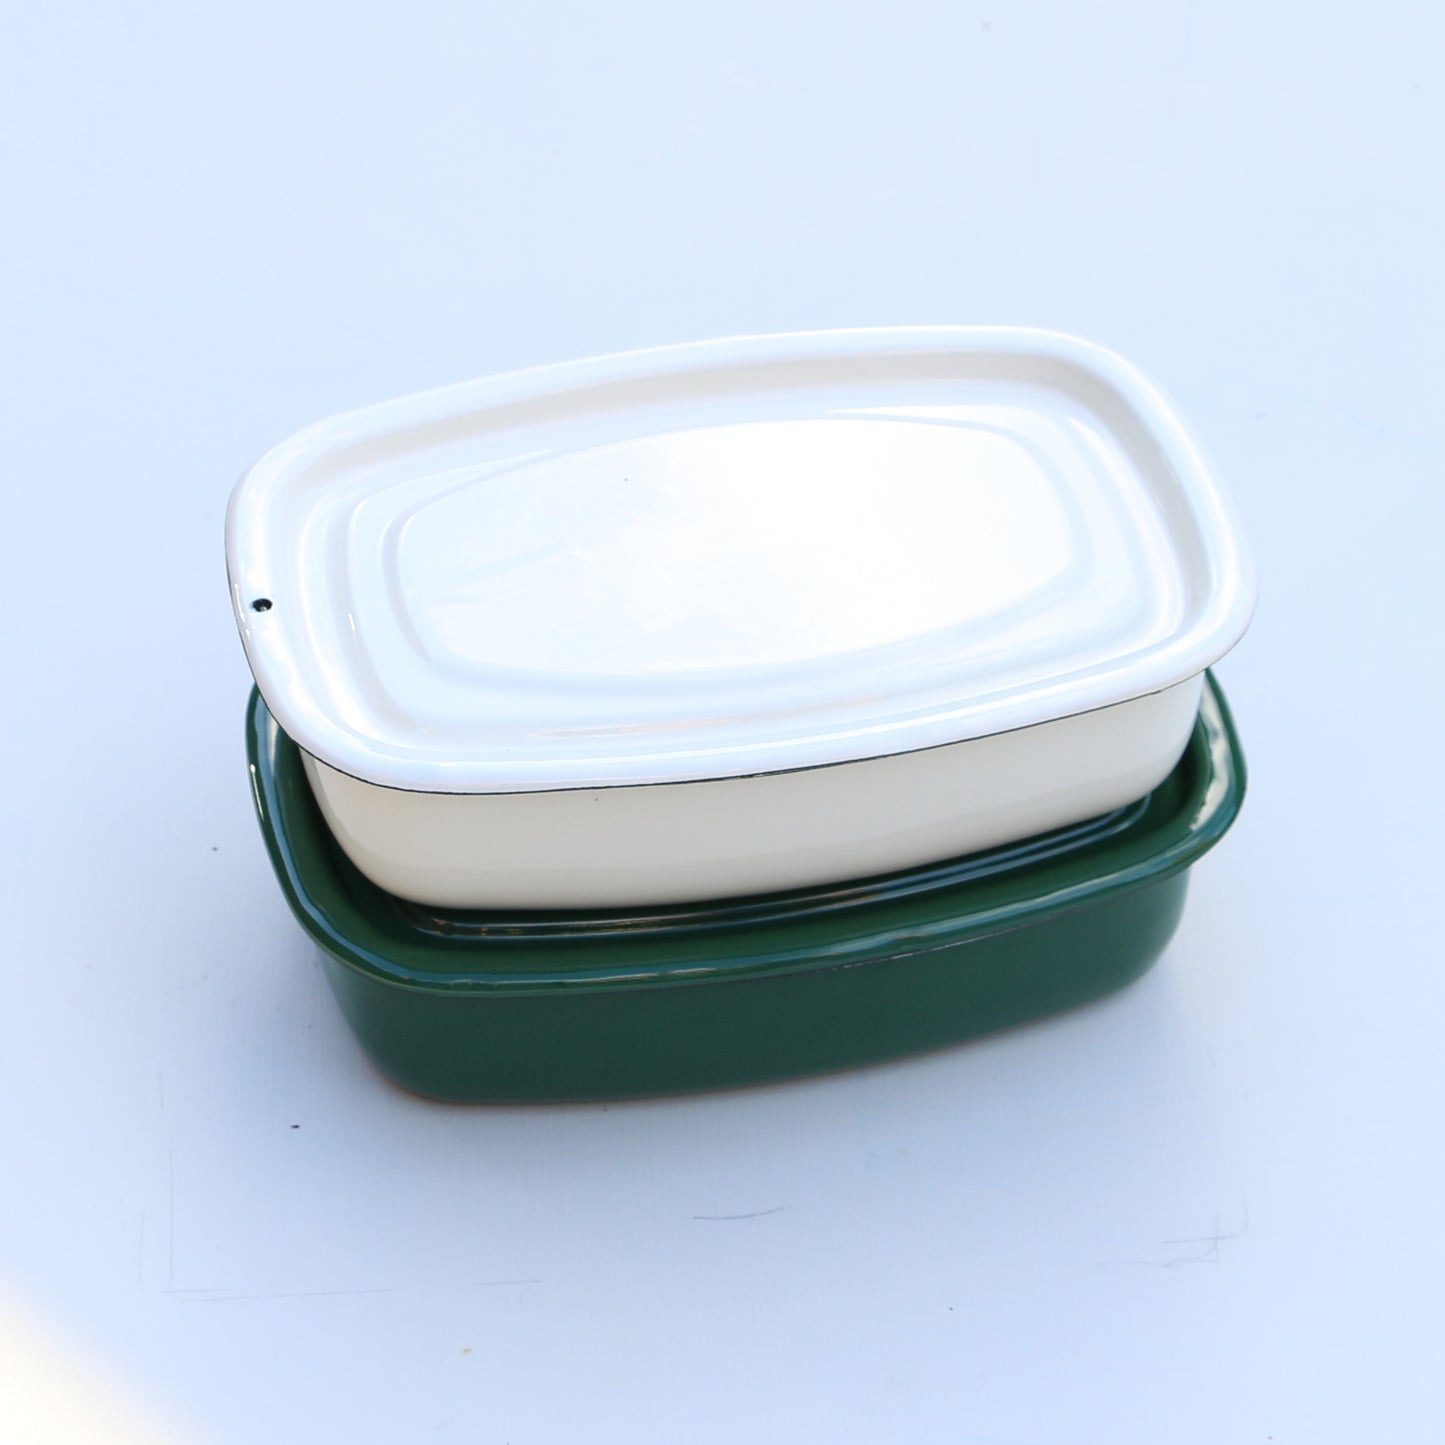 Enamel  dish and lid: Large dark green